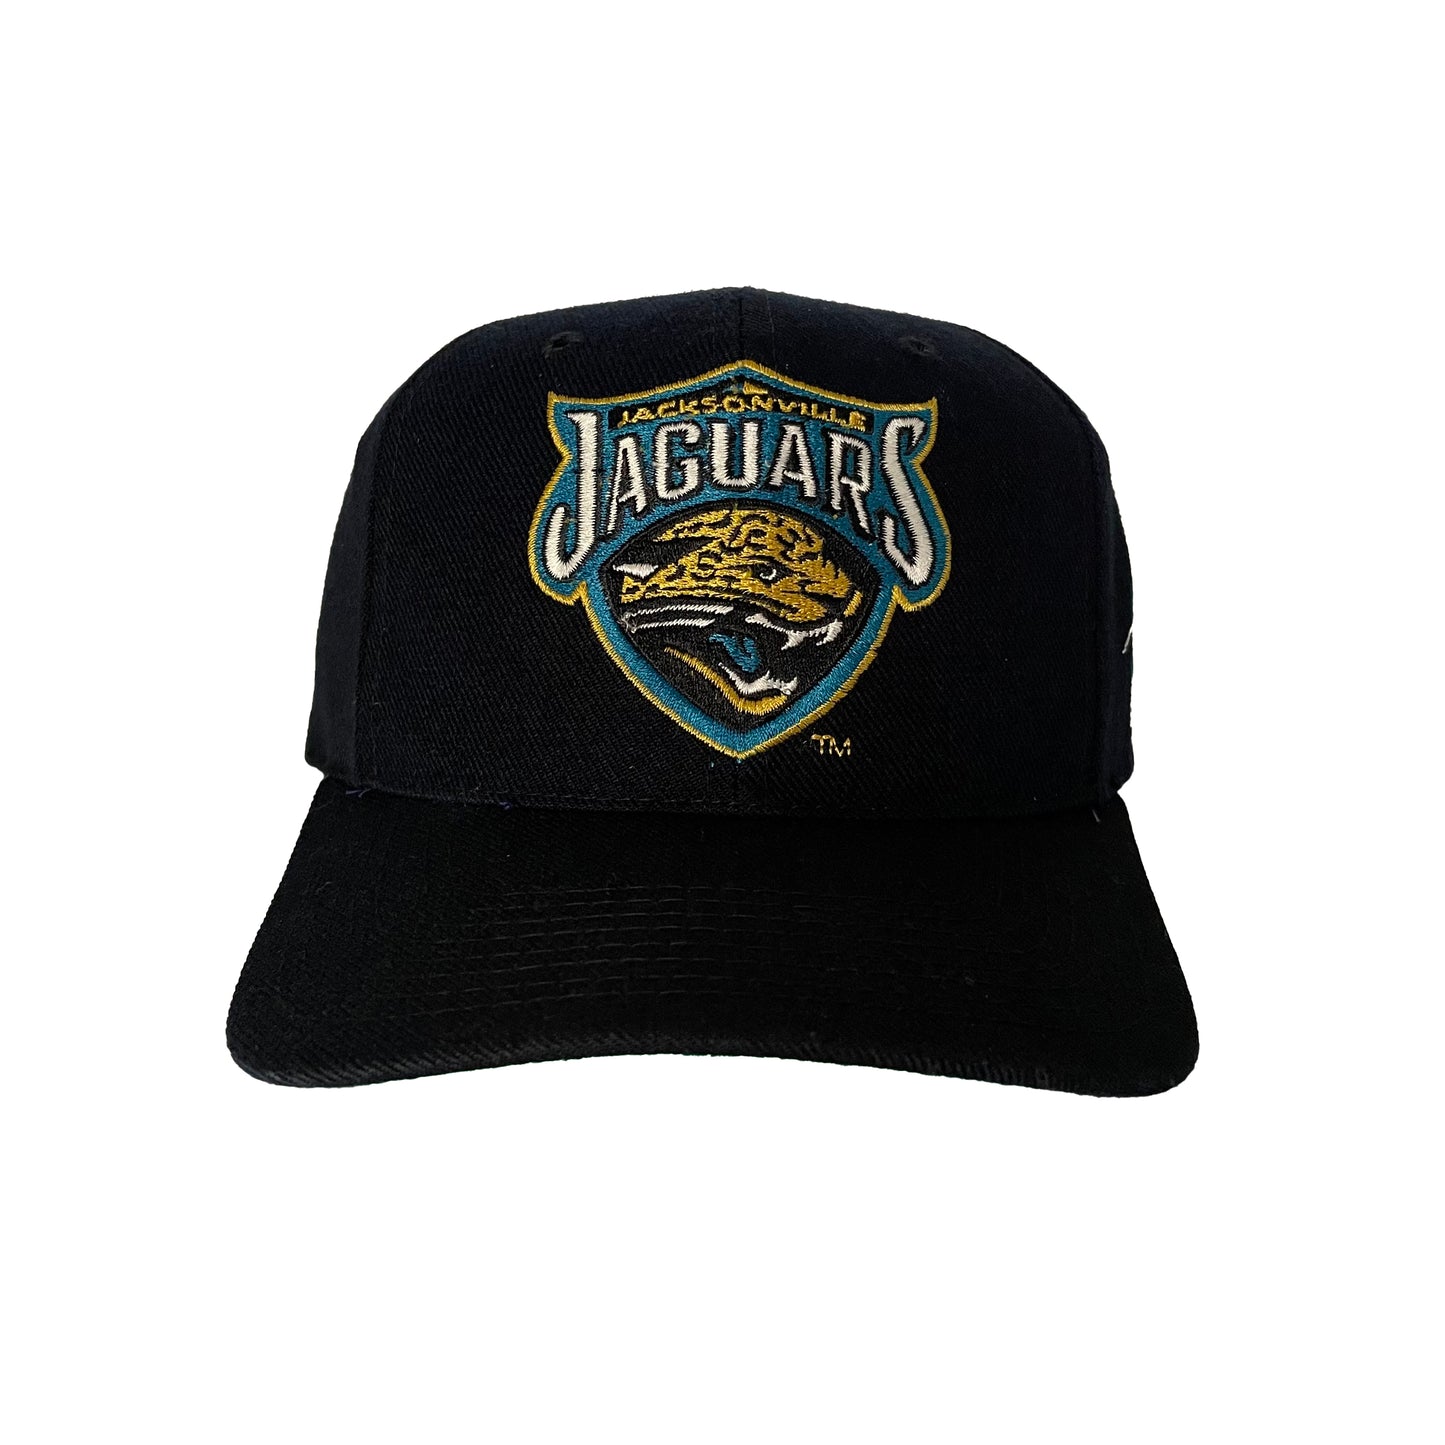 Vintage Jacksonville Jaguars SPORTS SPECIALTIES hat